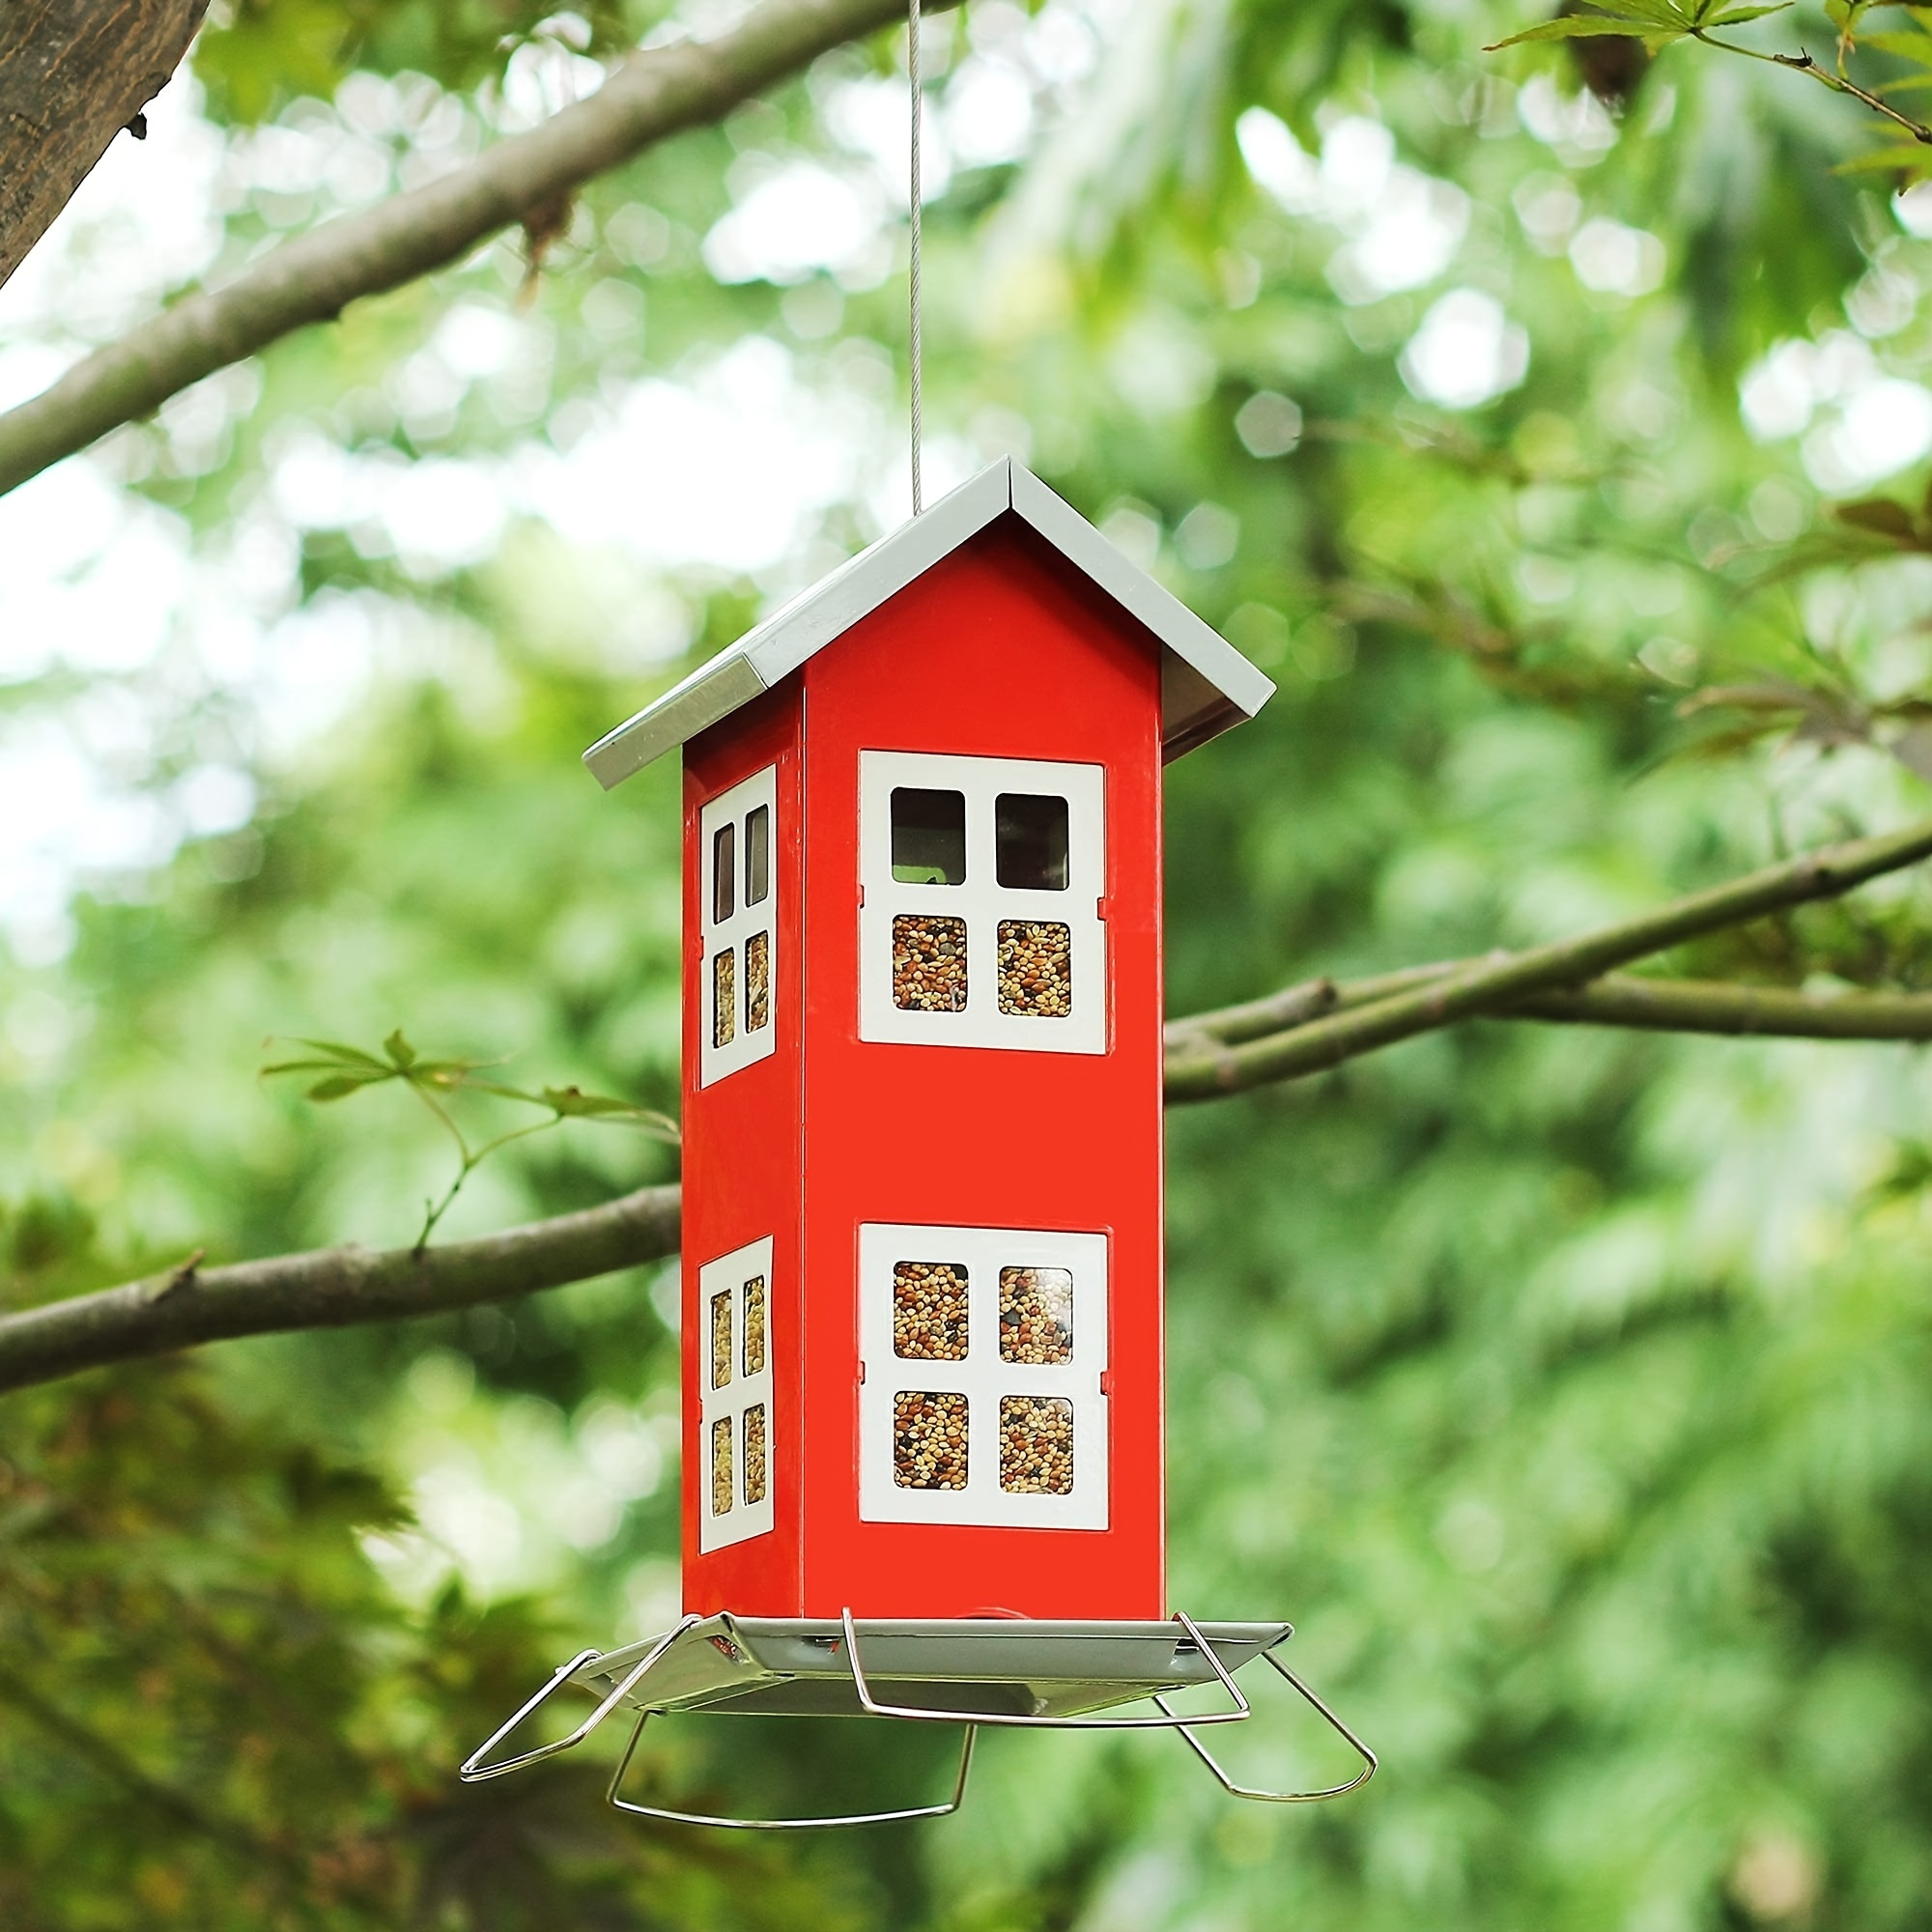 

Metal Wild Bird Feeder, Weatherproof Design For Easy Cleaning & Refills, Comes With Hook To Hang On Tree, Poles In Backyard Garden, Gift Idea For Bird Lovers